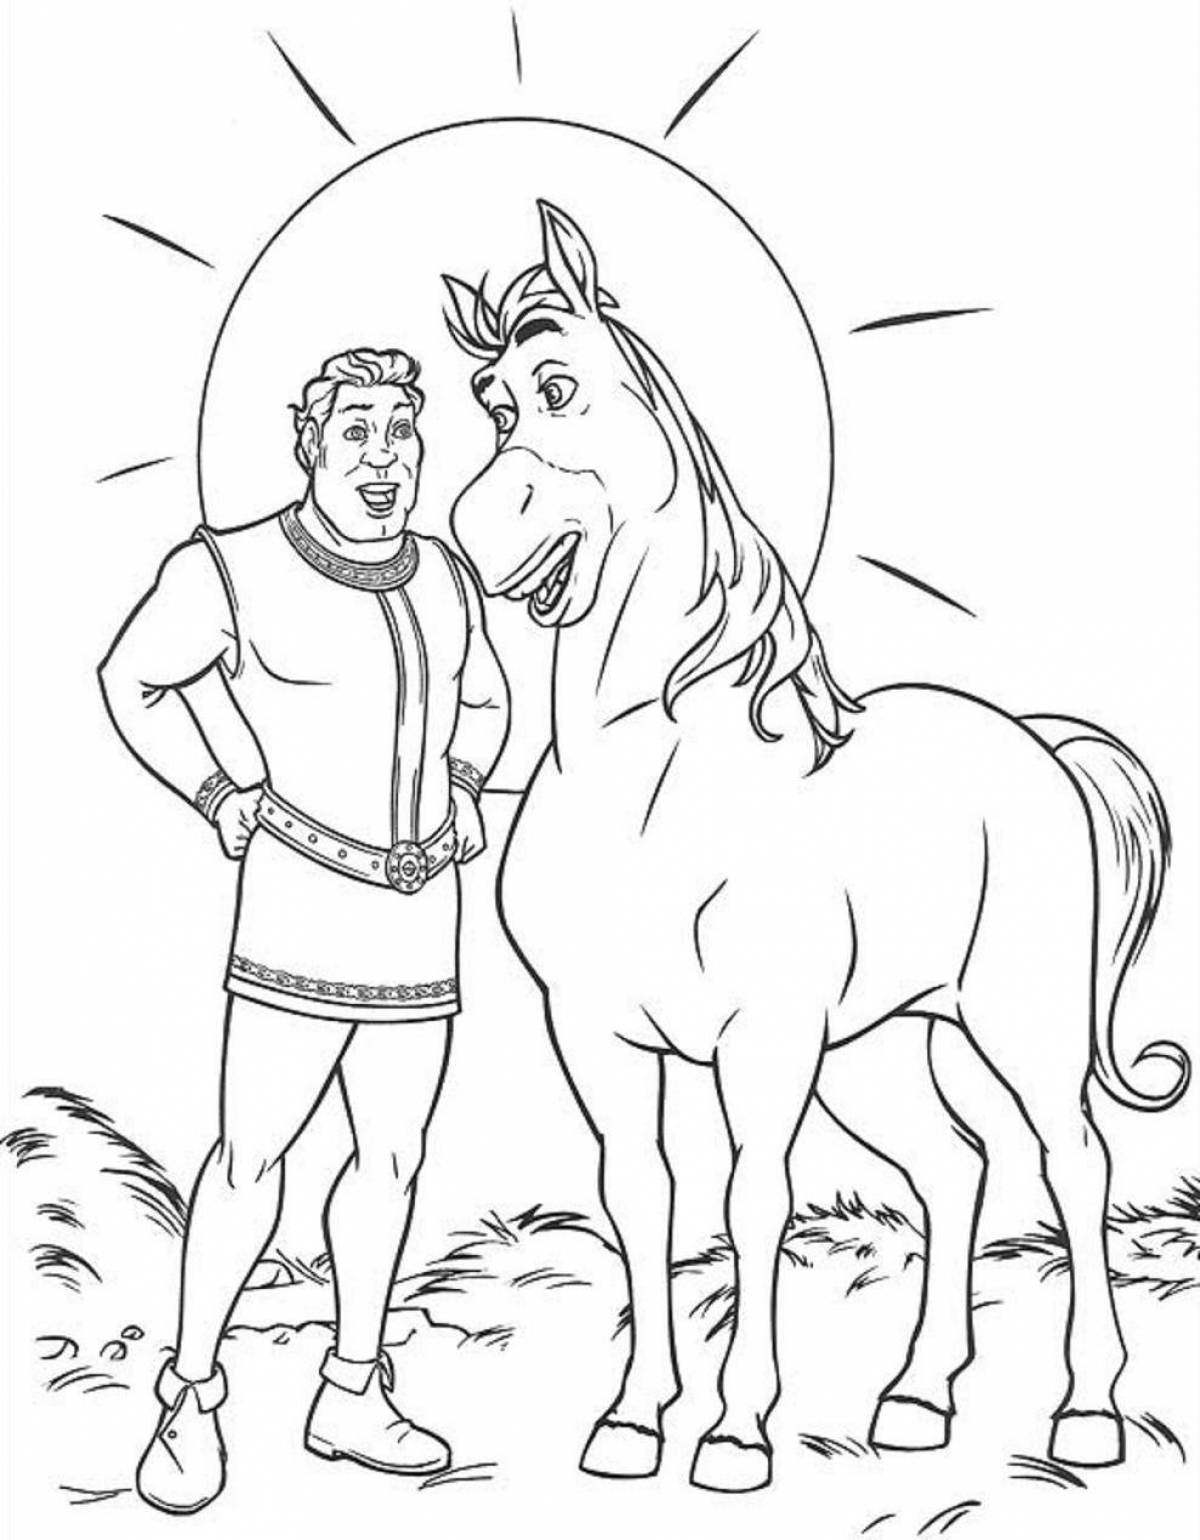 Exalted coloring book hero on horseback